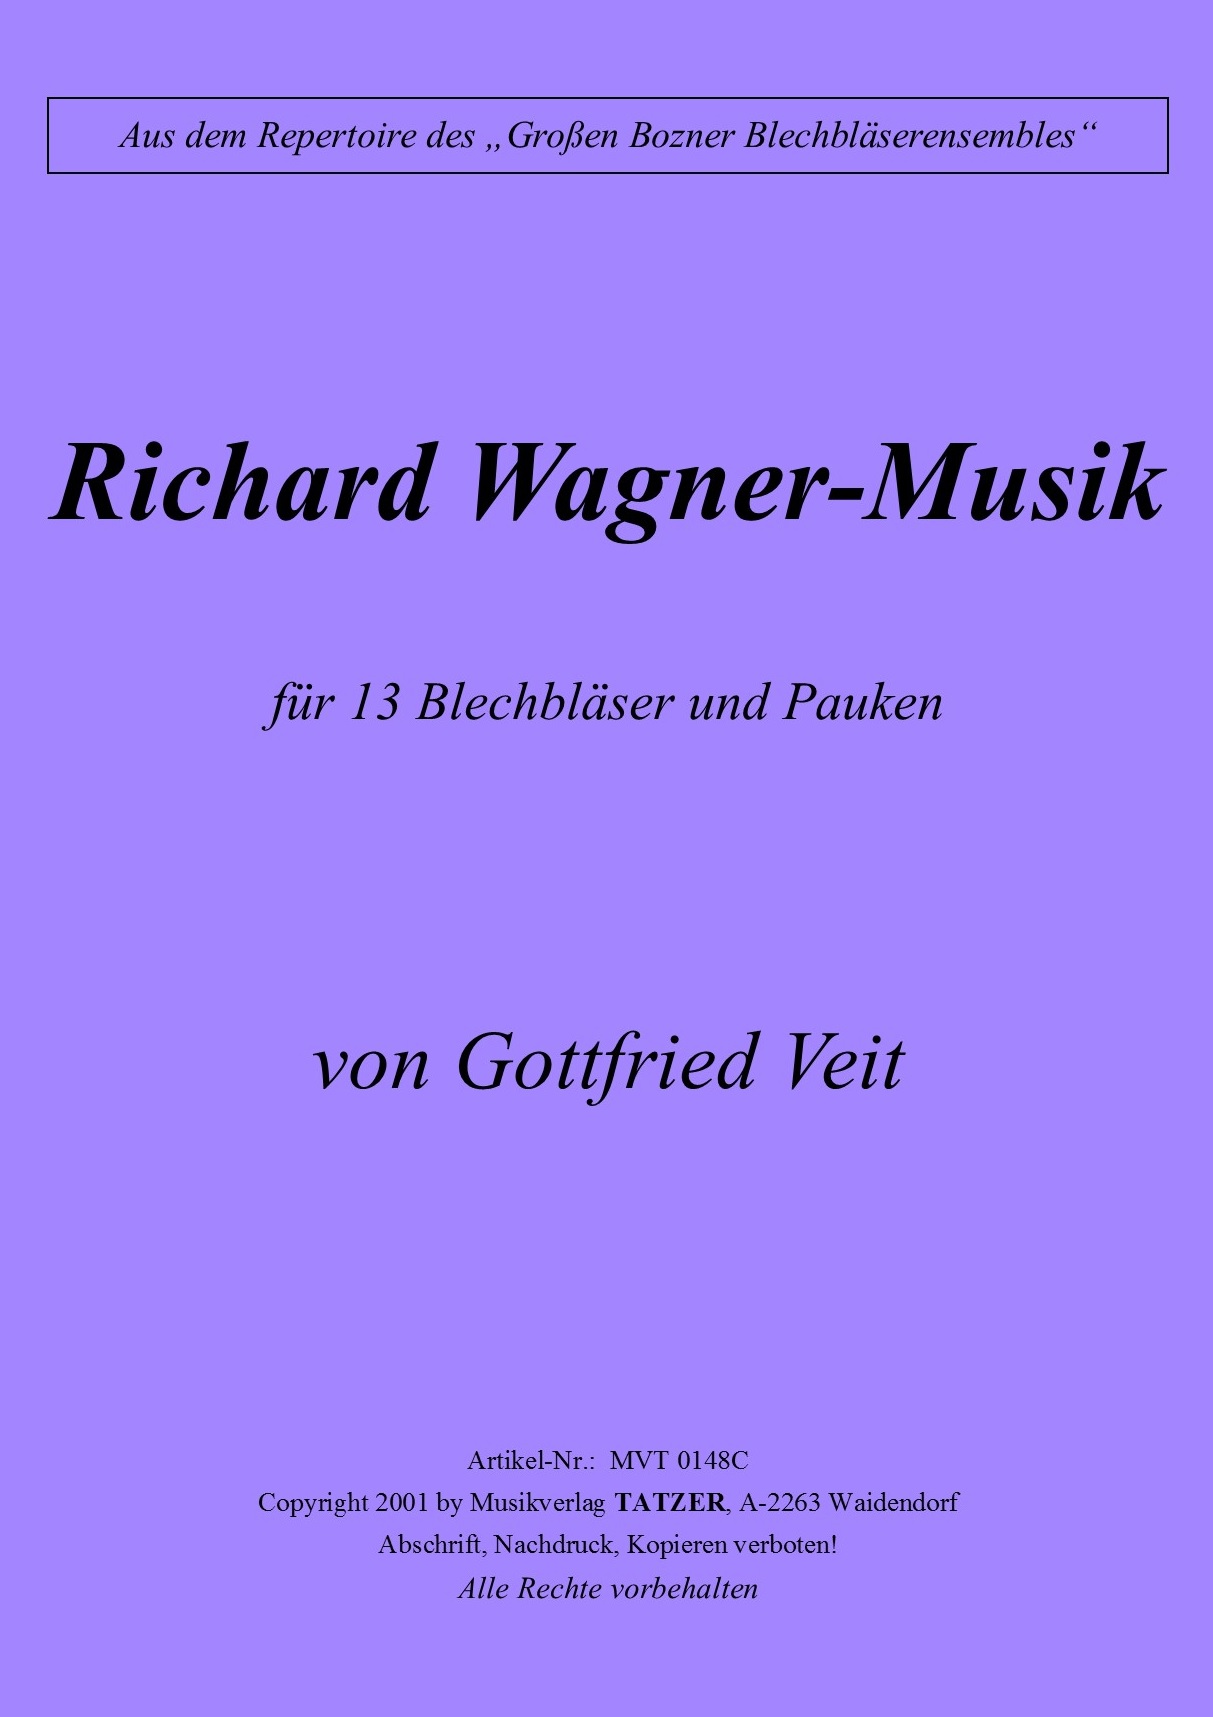 Richard Wagner Musik (C), Gottfried Veit